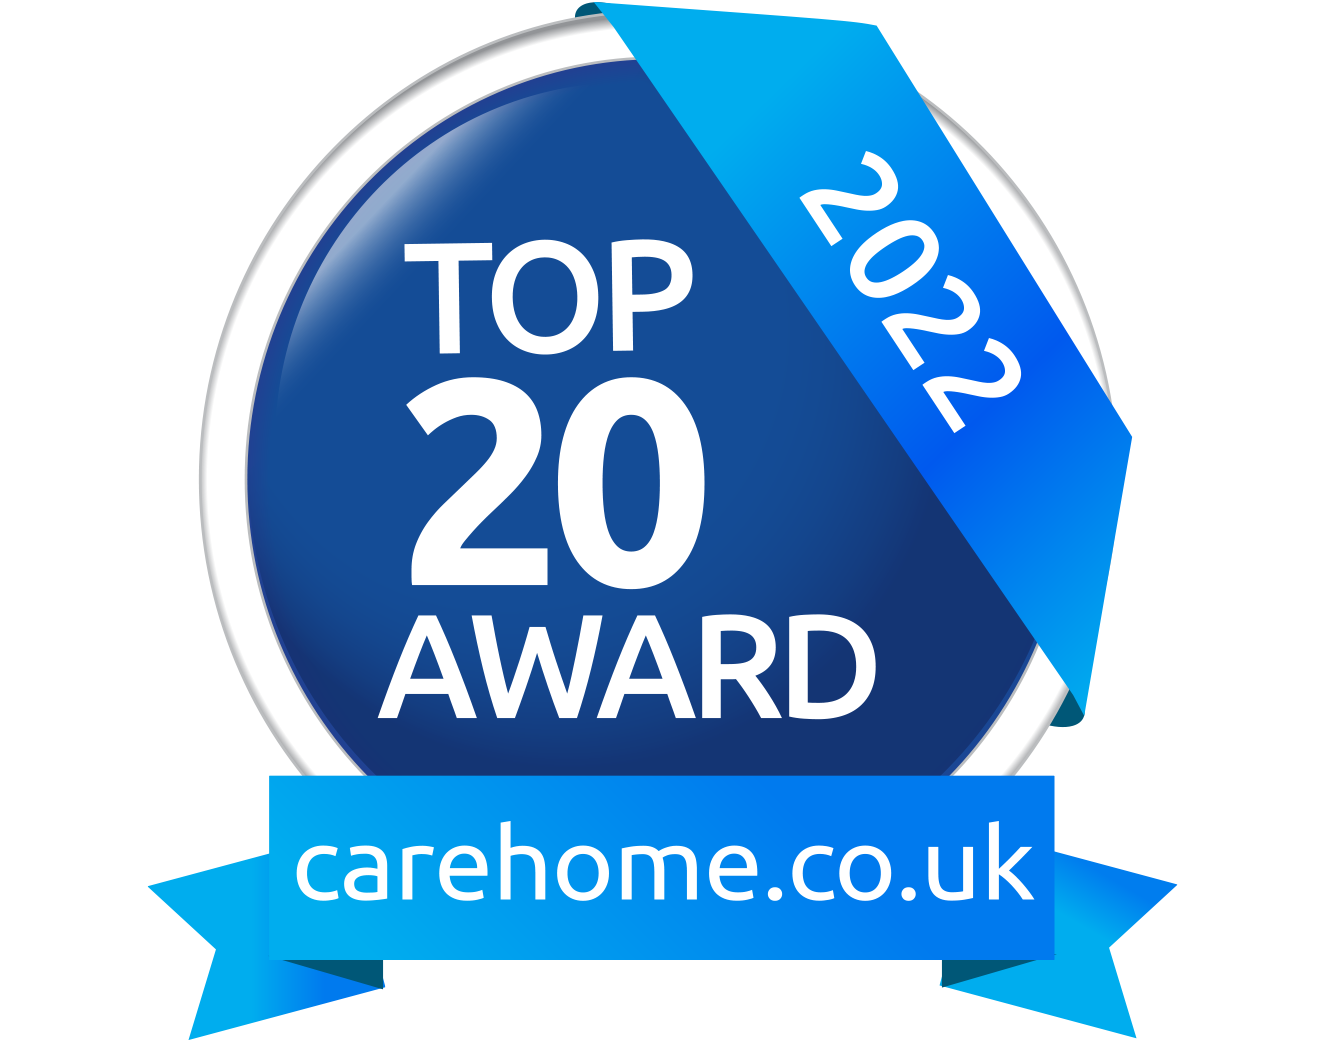 Top 20 Care Home Award 2022